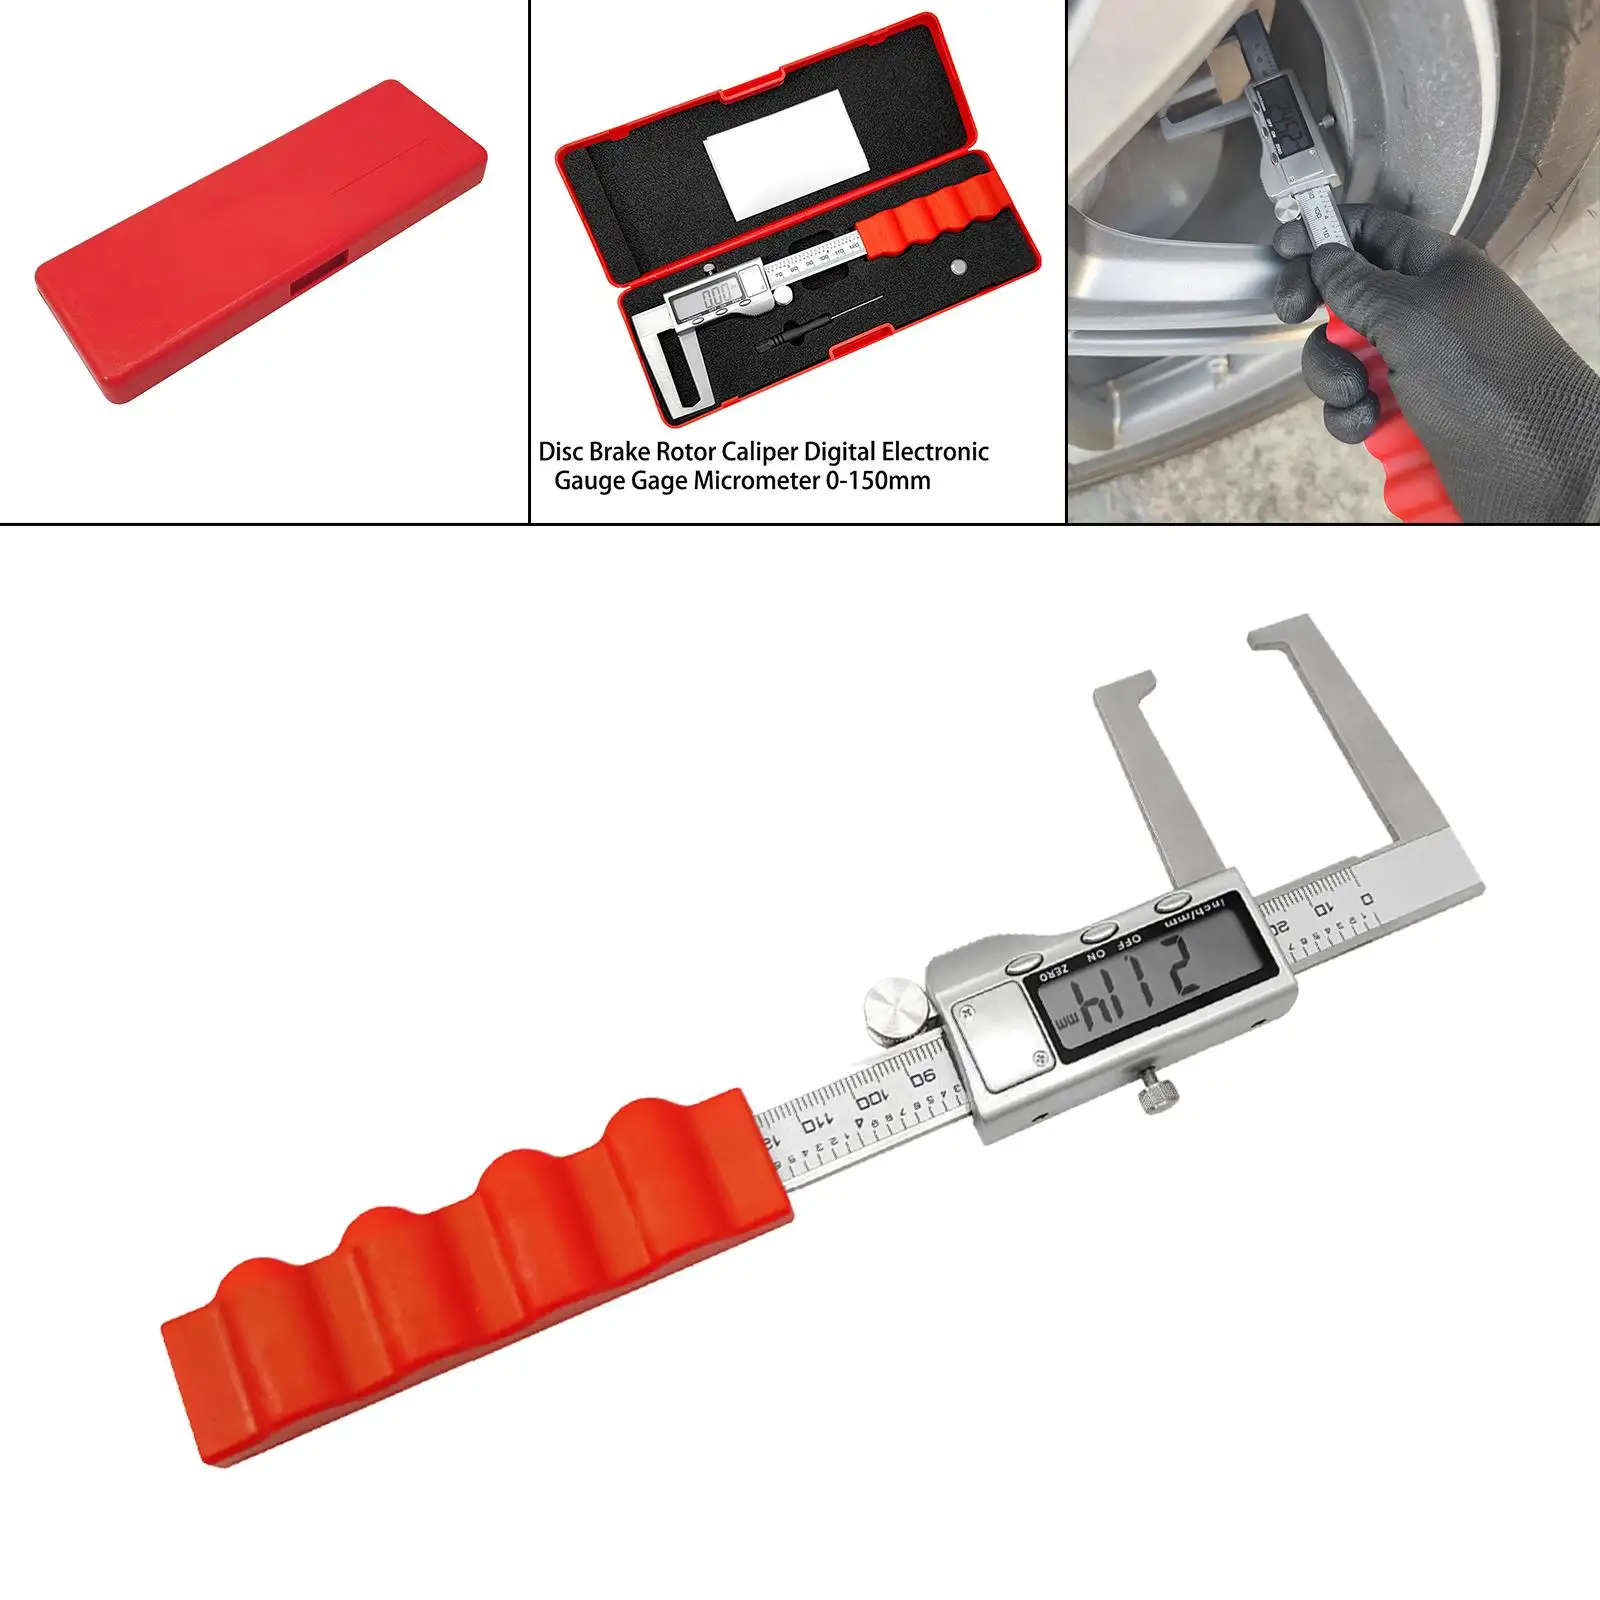 Quality brake discs   Caliper Digital Gauge measuring tool 0-150mm